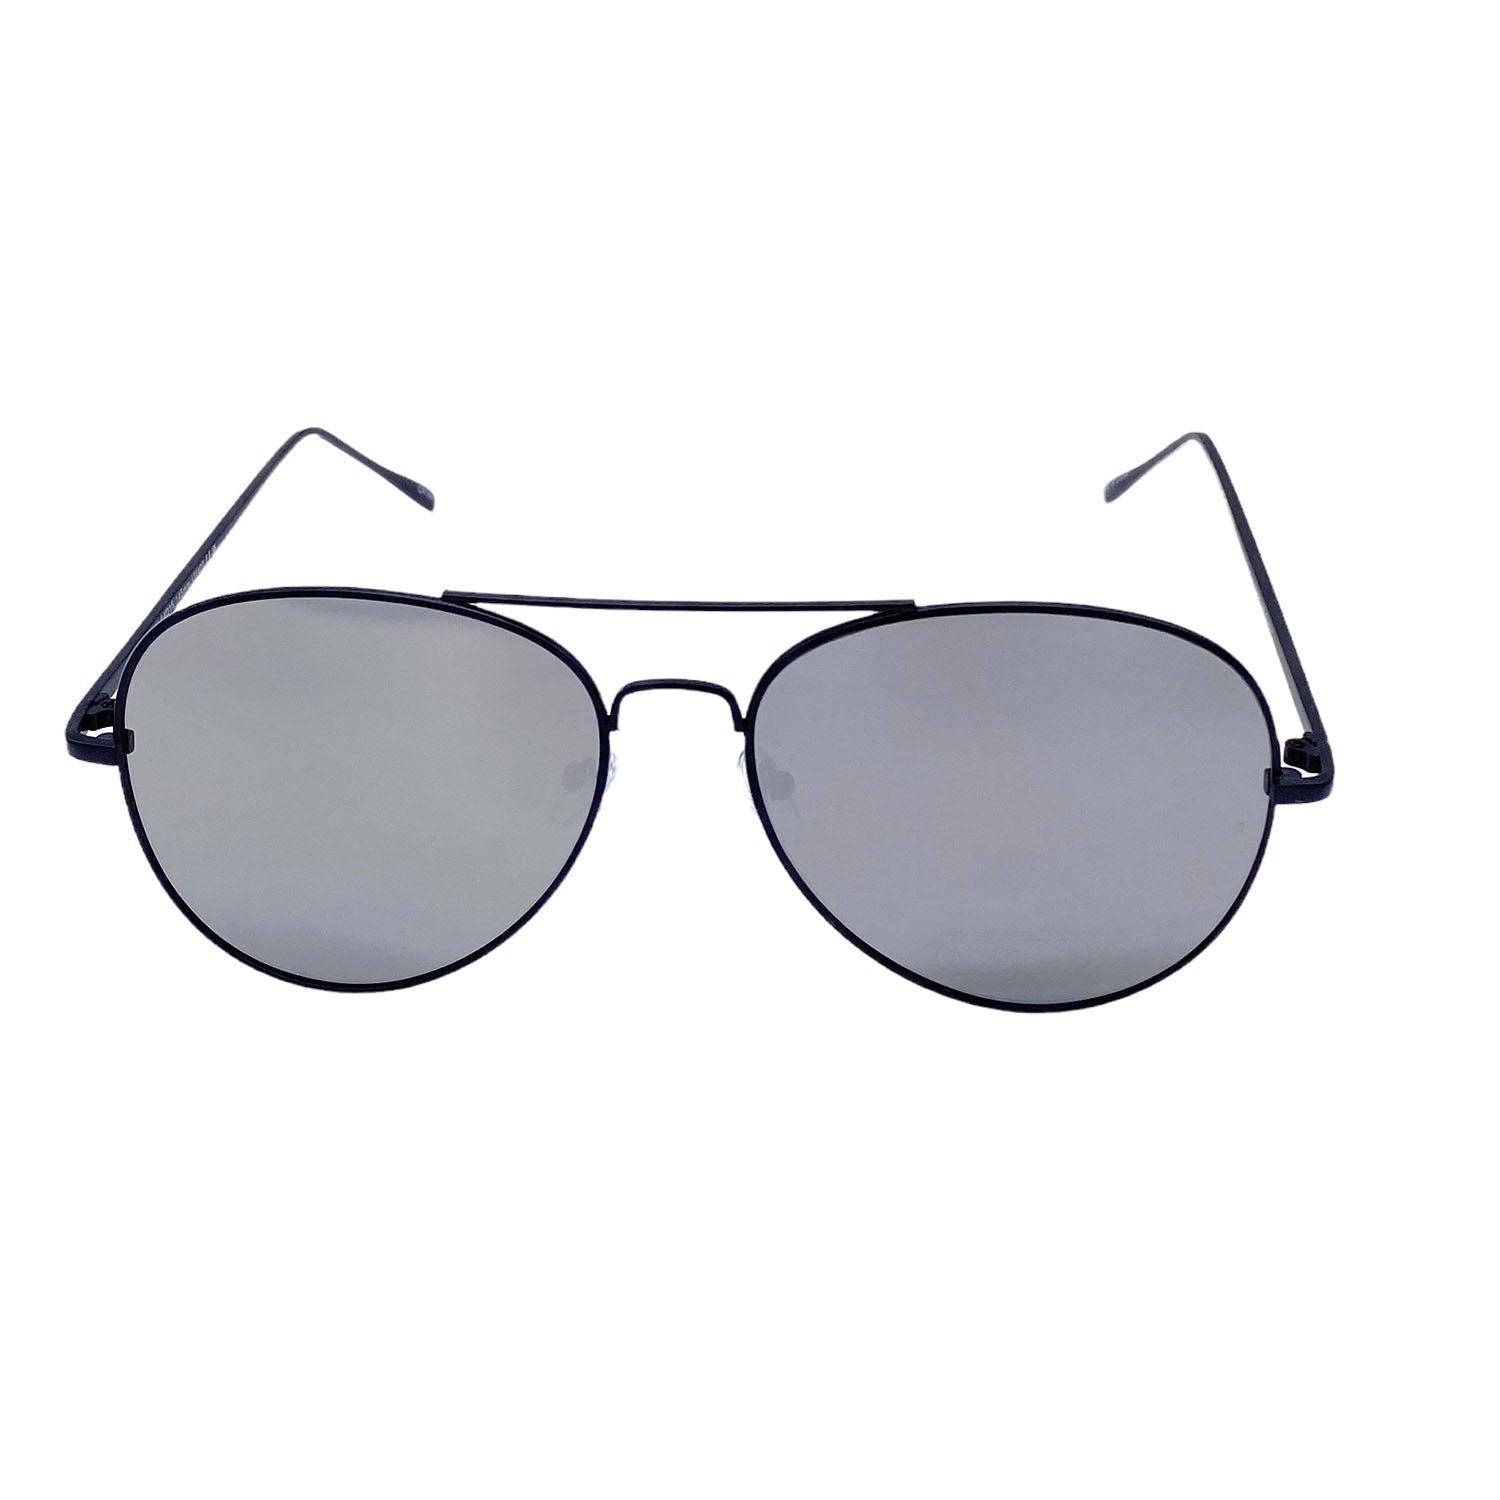 Empire Cove Classic Aviator Sunglasses Metal Frame Mirrored Lens UV Protection